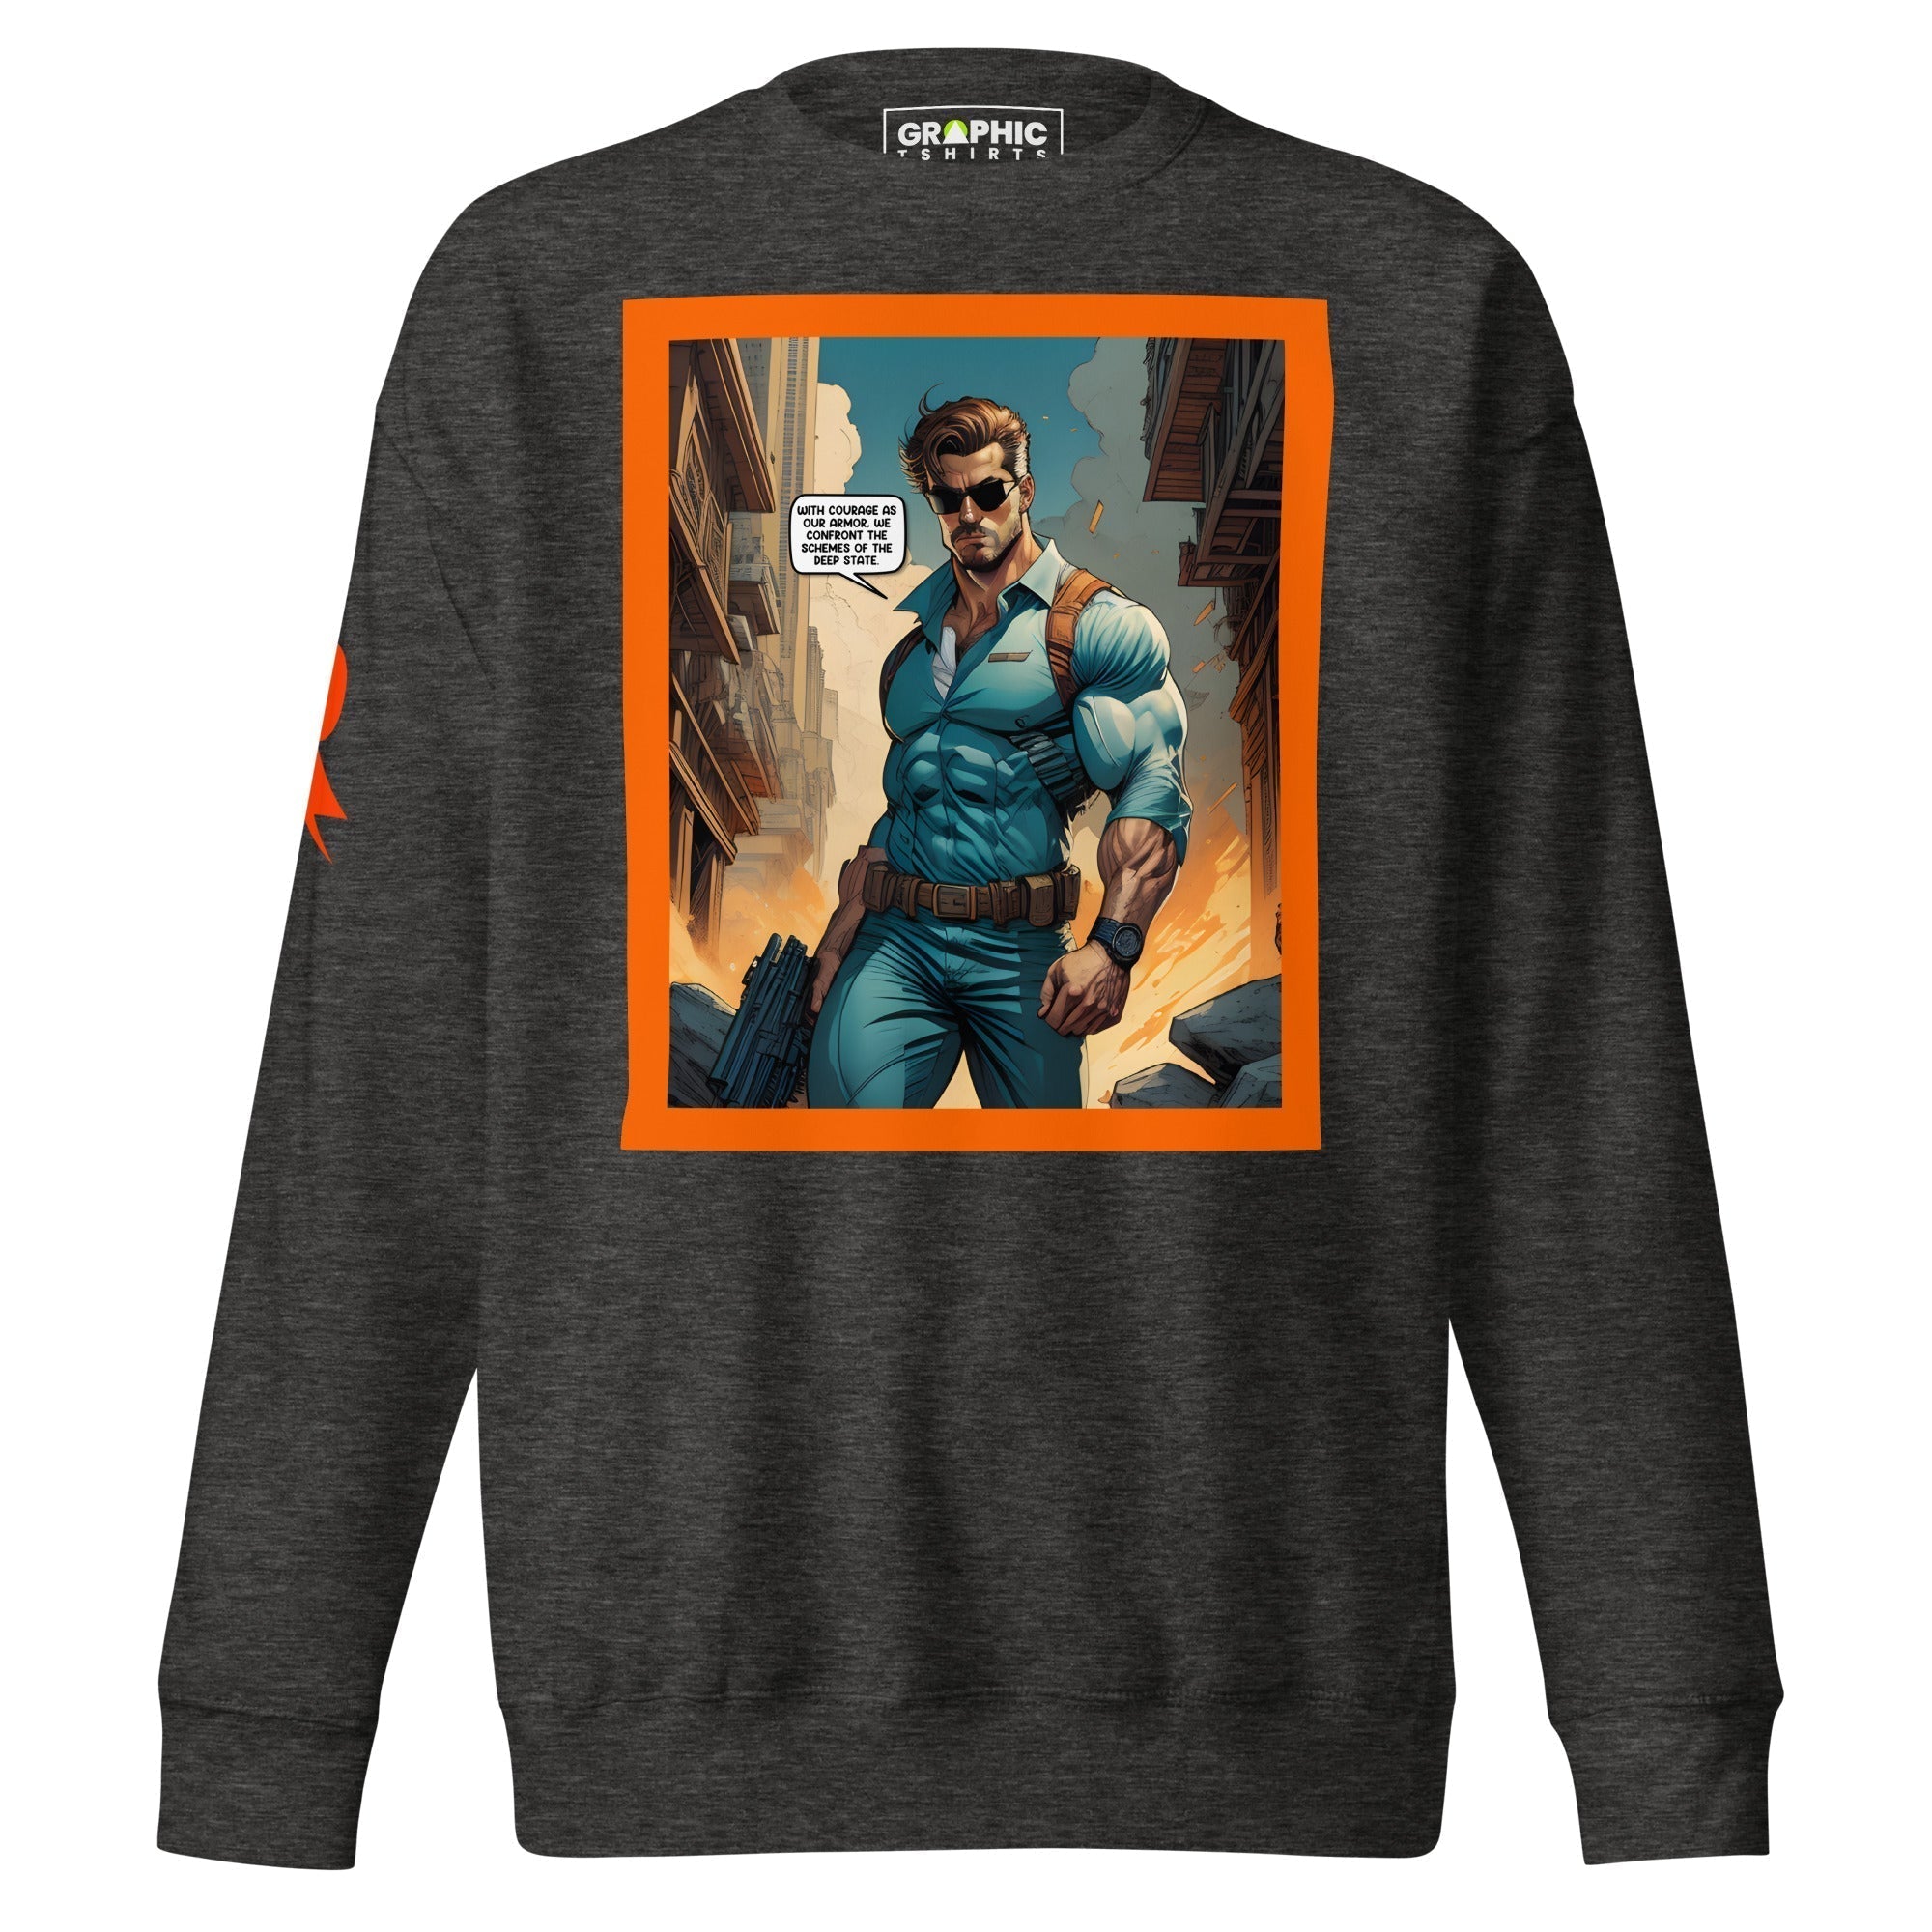 Unisex Premium Sweatshirt - Retribution: Heroes Unleashed v.56 - GRAPHIC T-SHIRTS